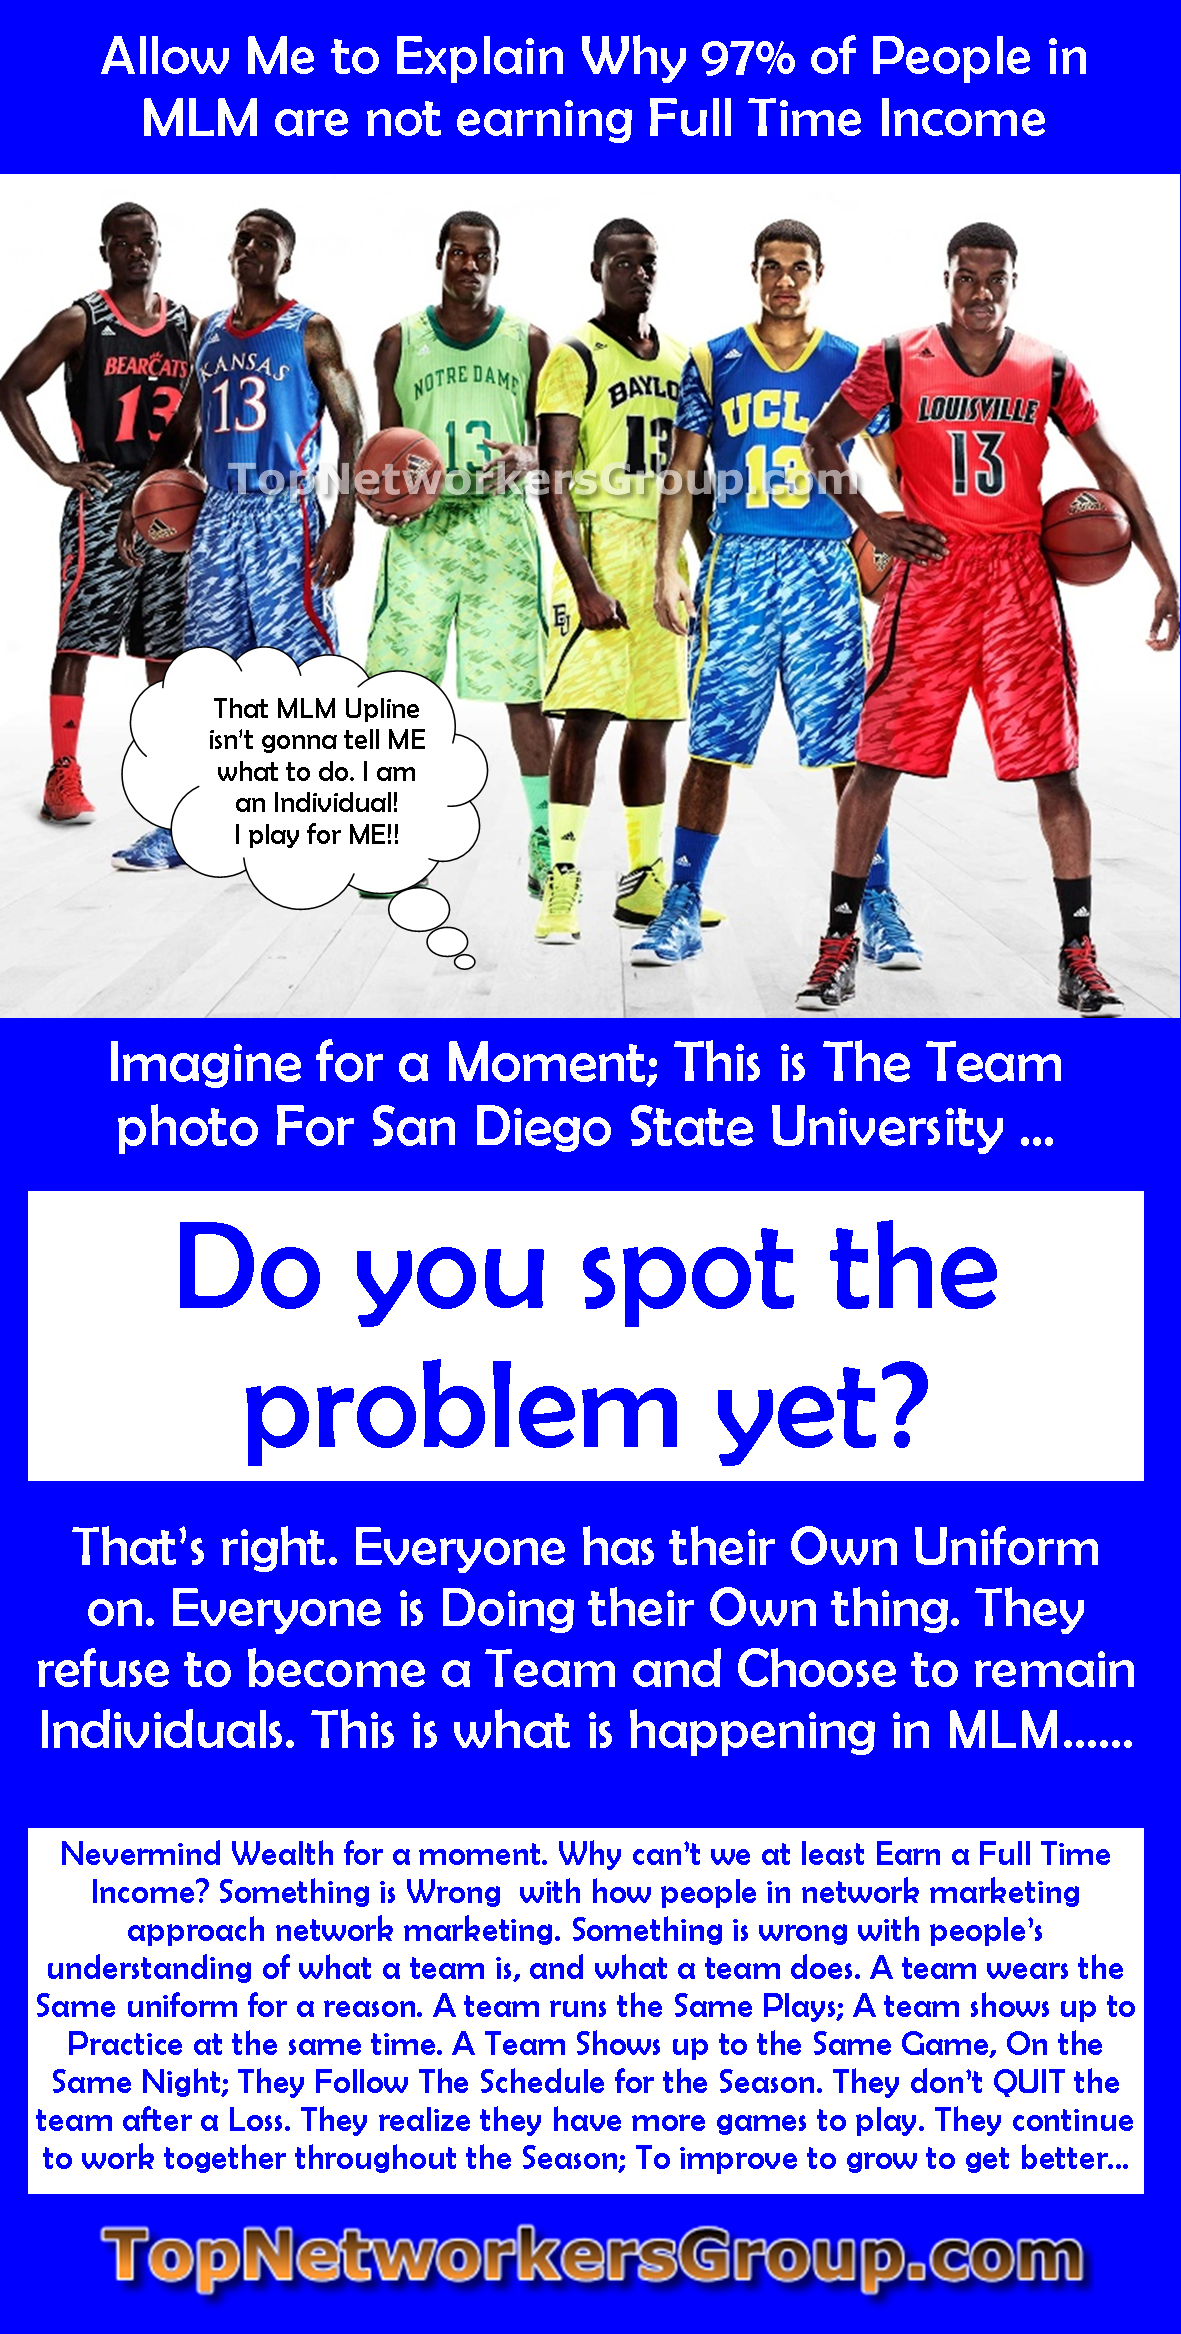 Teams Wear the Same Uniform for a reason